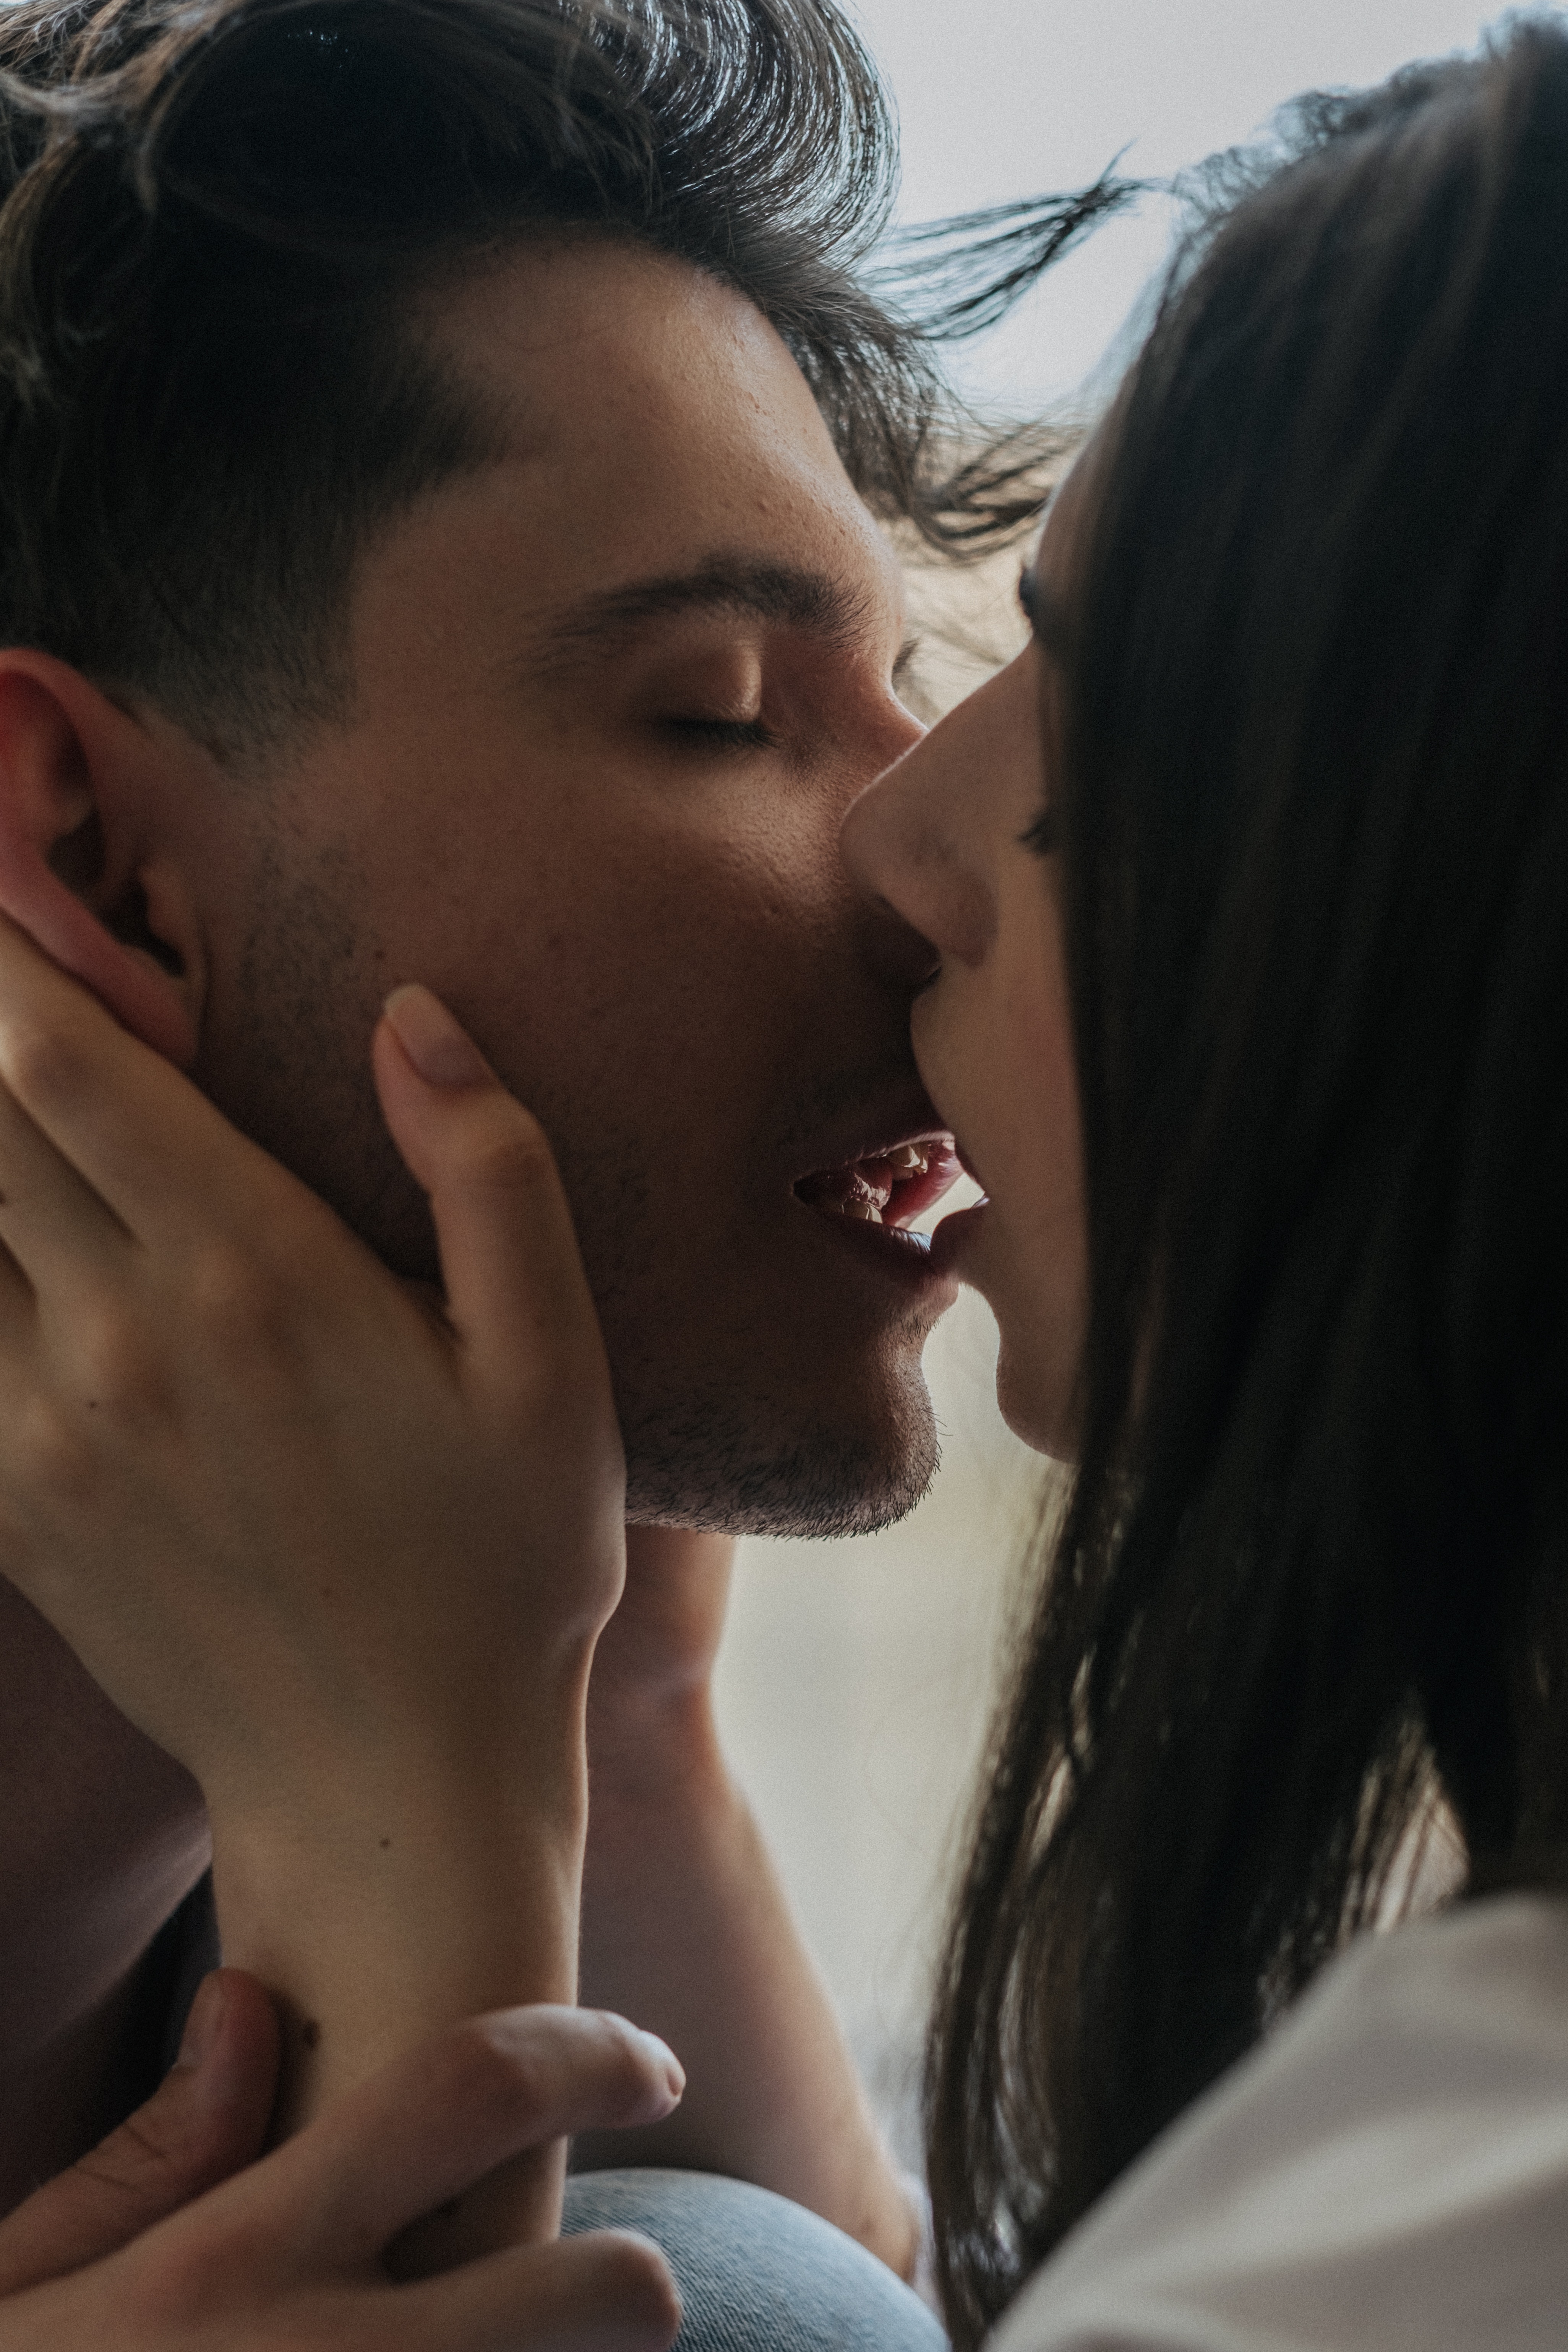 A couple kissing. | Source: Pexels